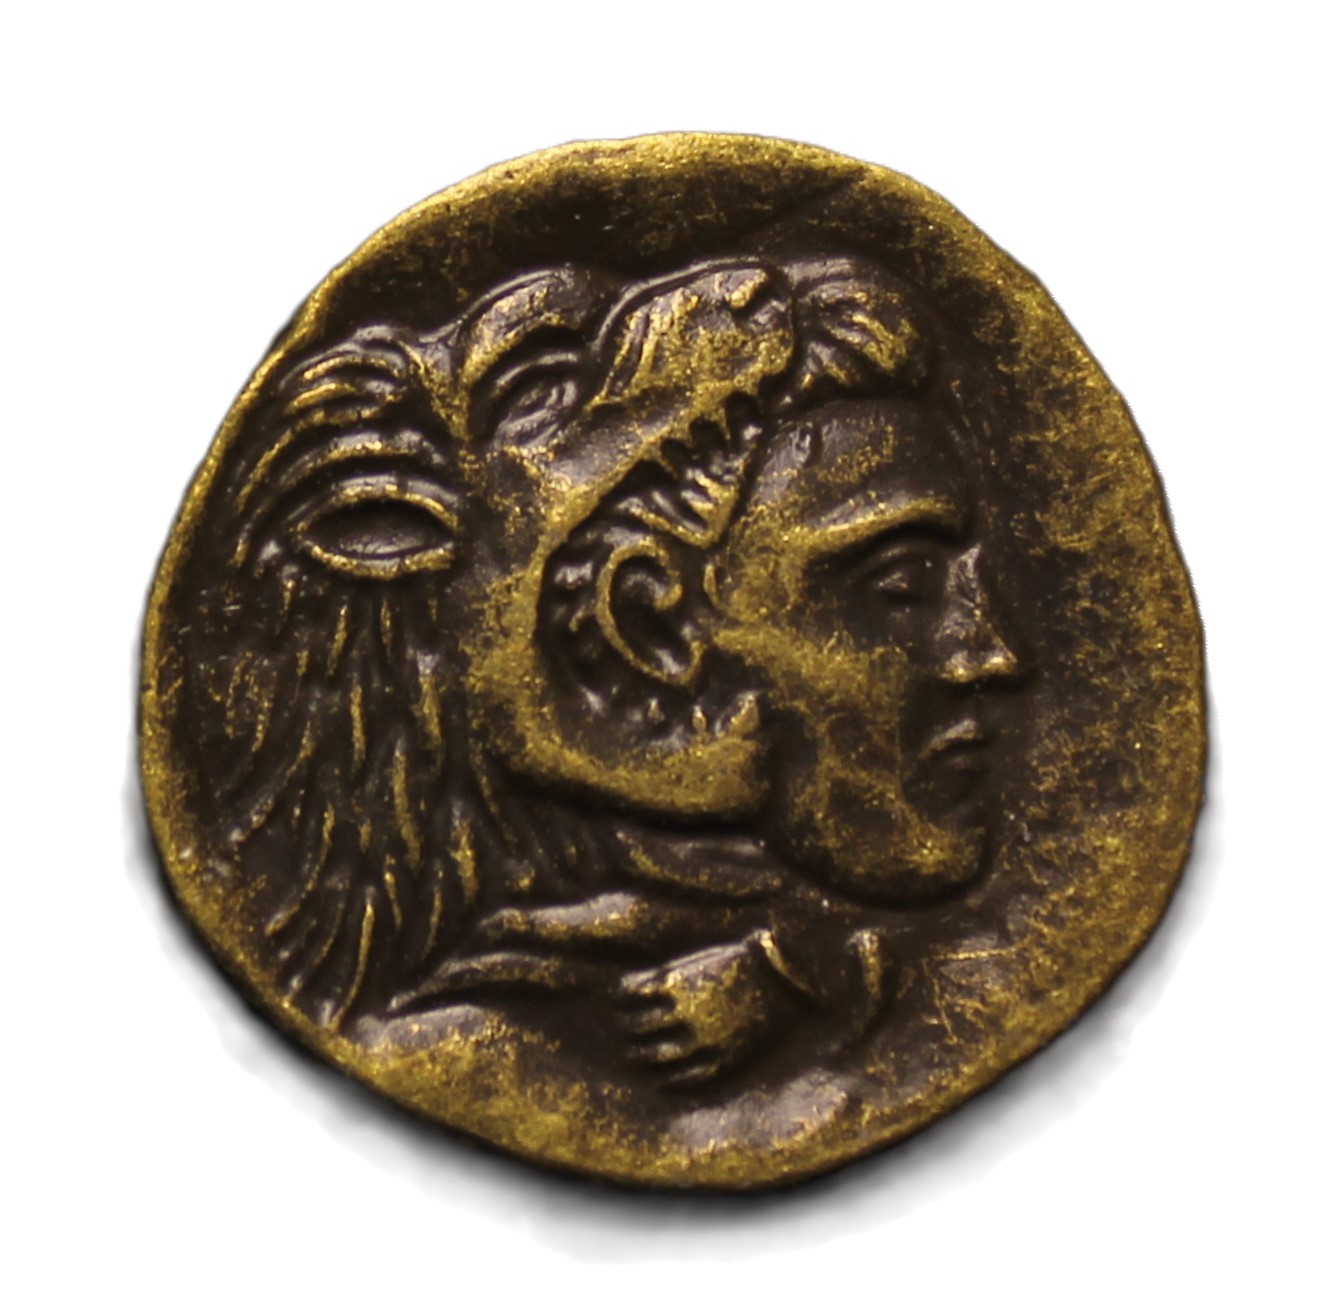 Сувенирная монета 1toy Золото магнитного моря Геракл